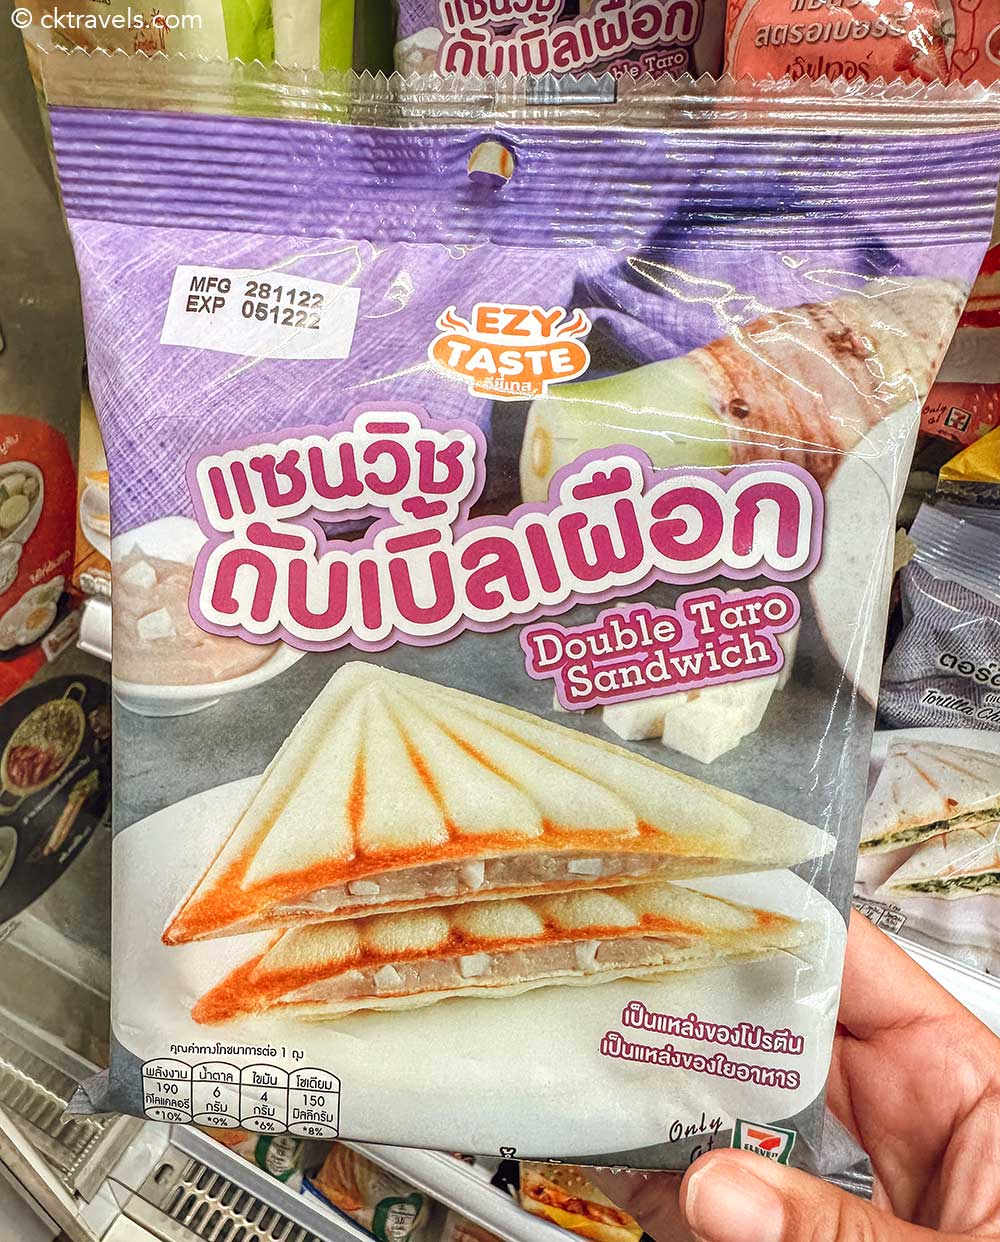 Double Taro Toasted Sandwich 7-Eleven Thailand